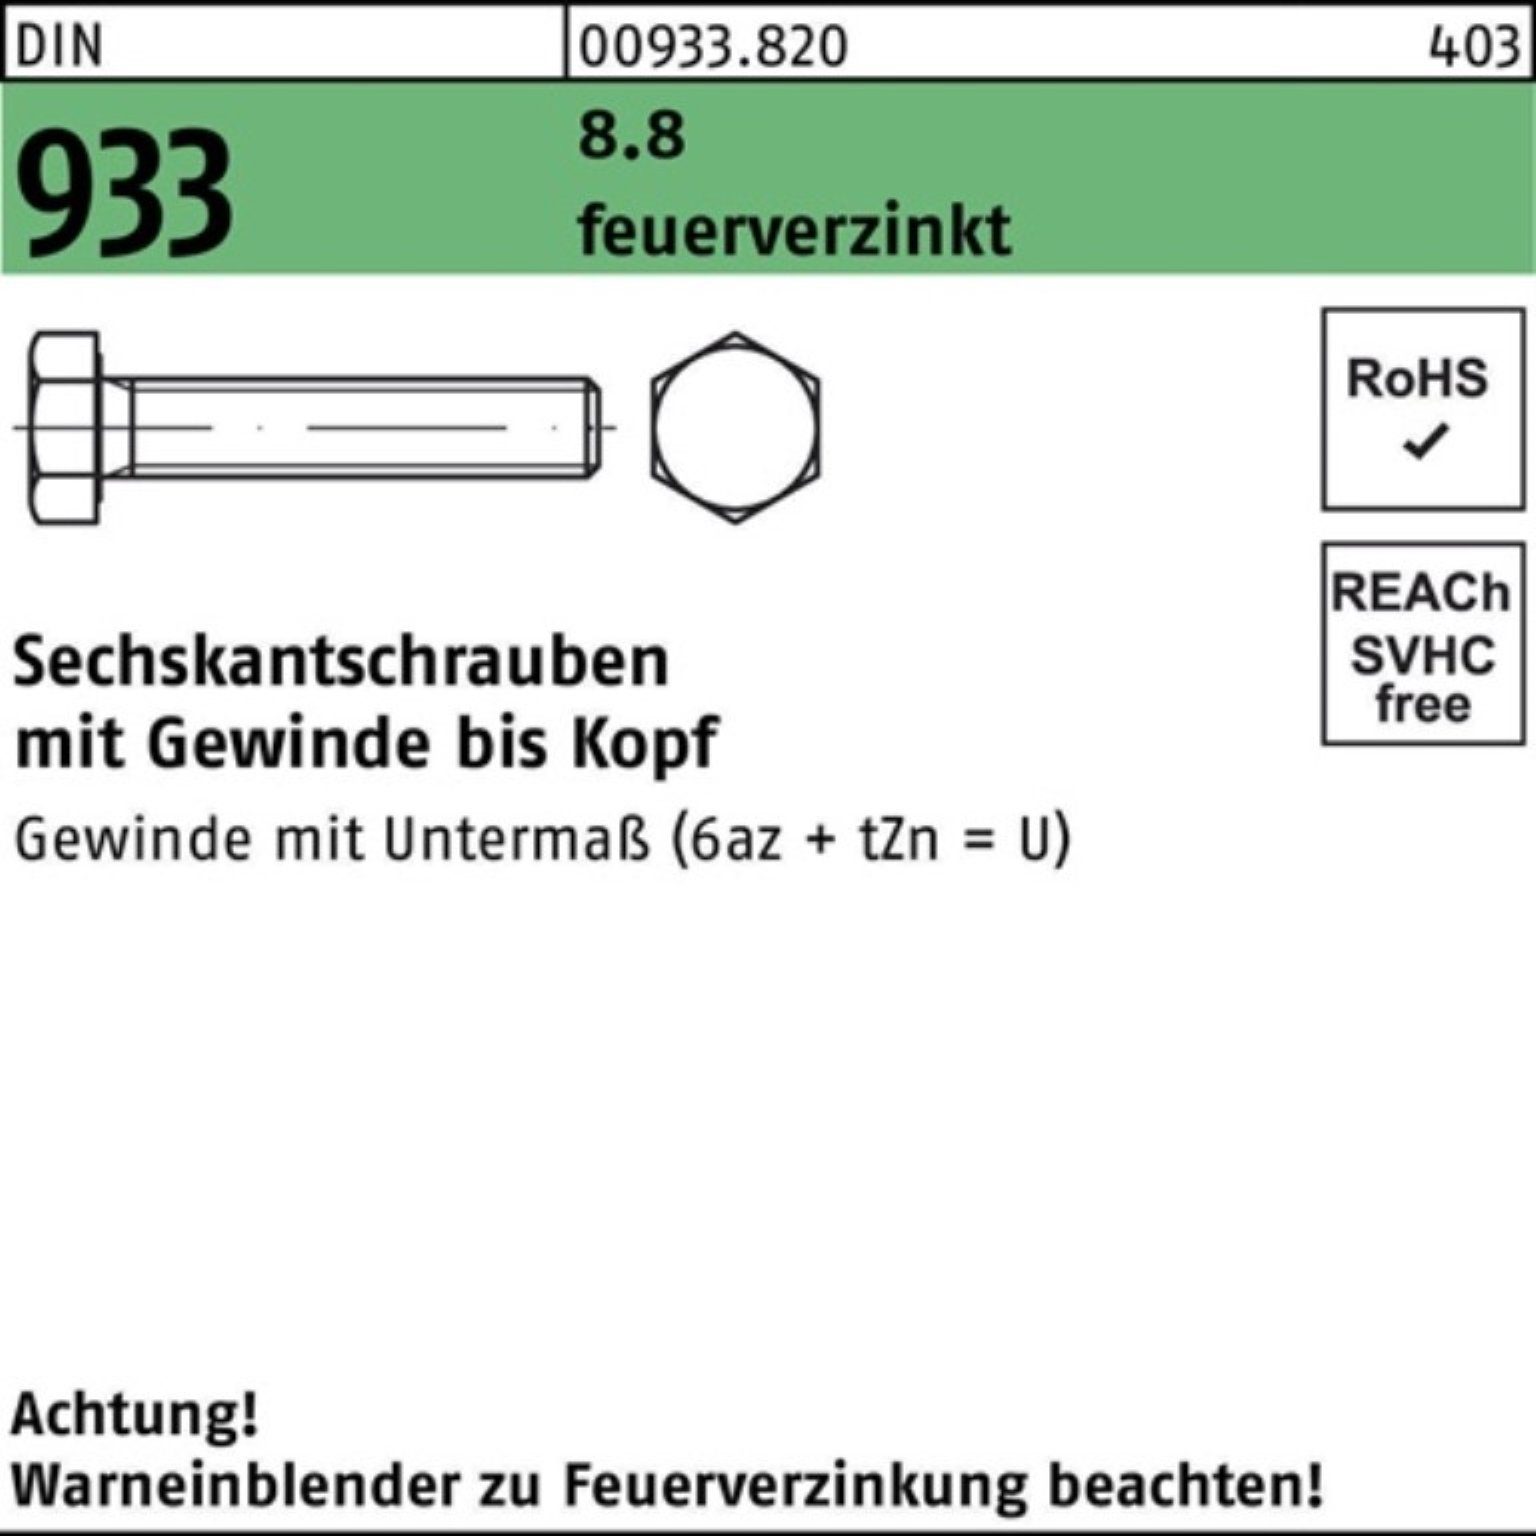 Reyher Sechskantschraube 100er Pack Sechskantschraube VG 50 feuerverz. 8.8 DIN M16x 933 45 Stü